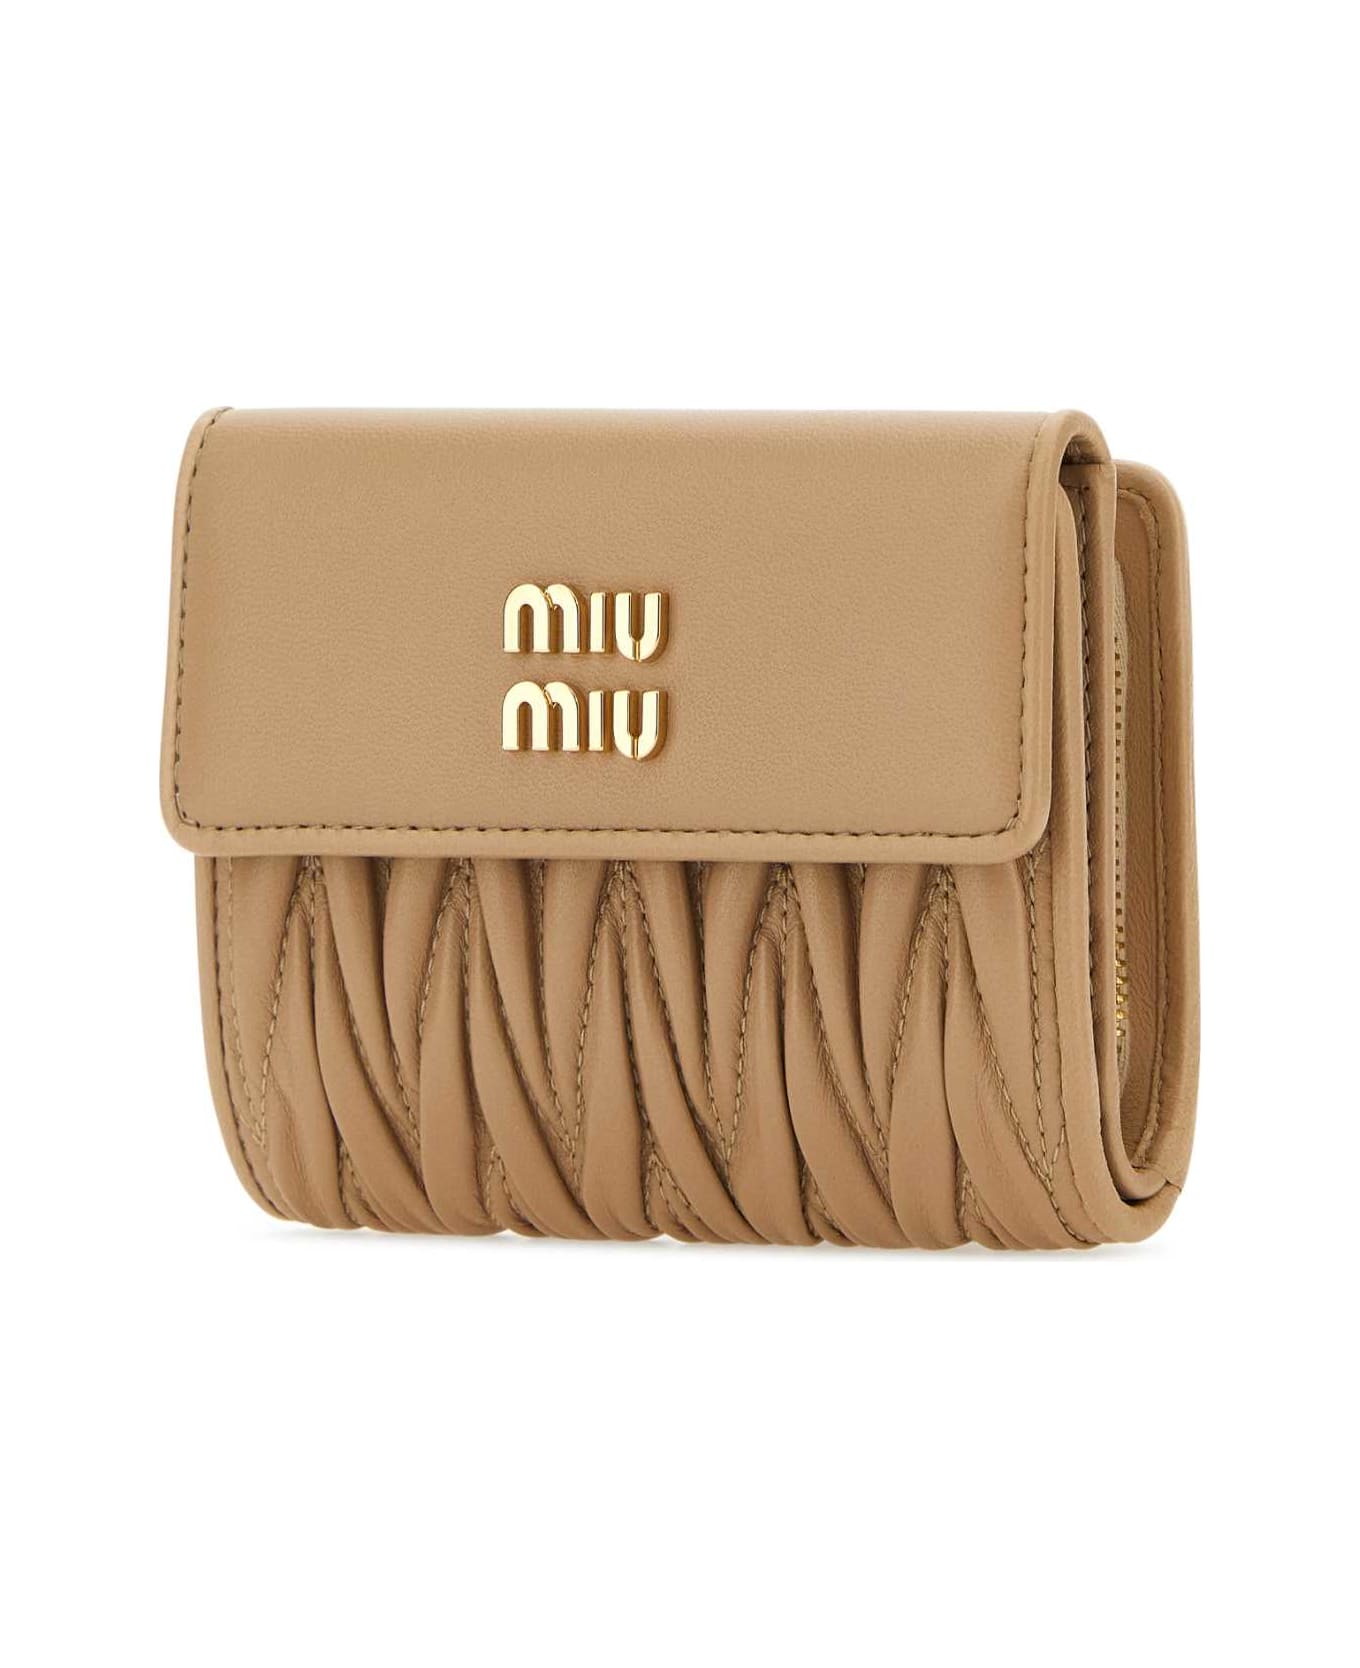 Miu Miu Sand Leather Wallet - SABBIA